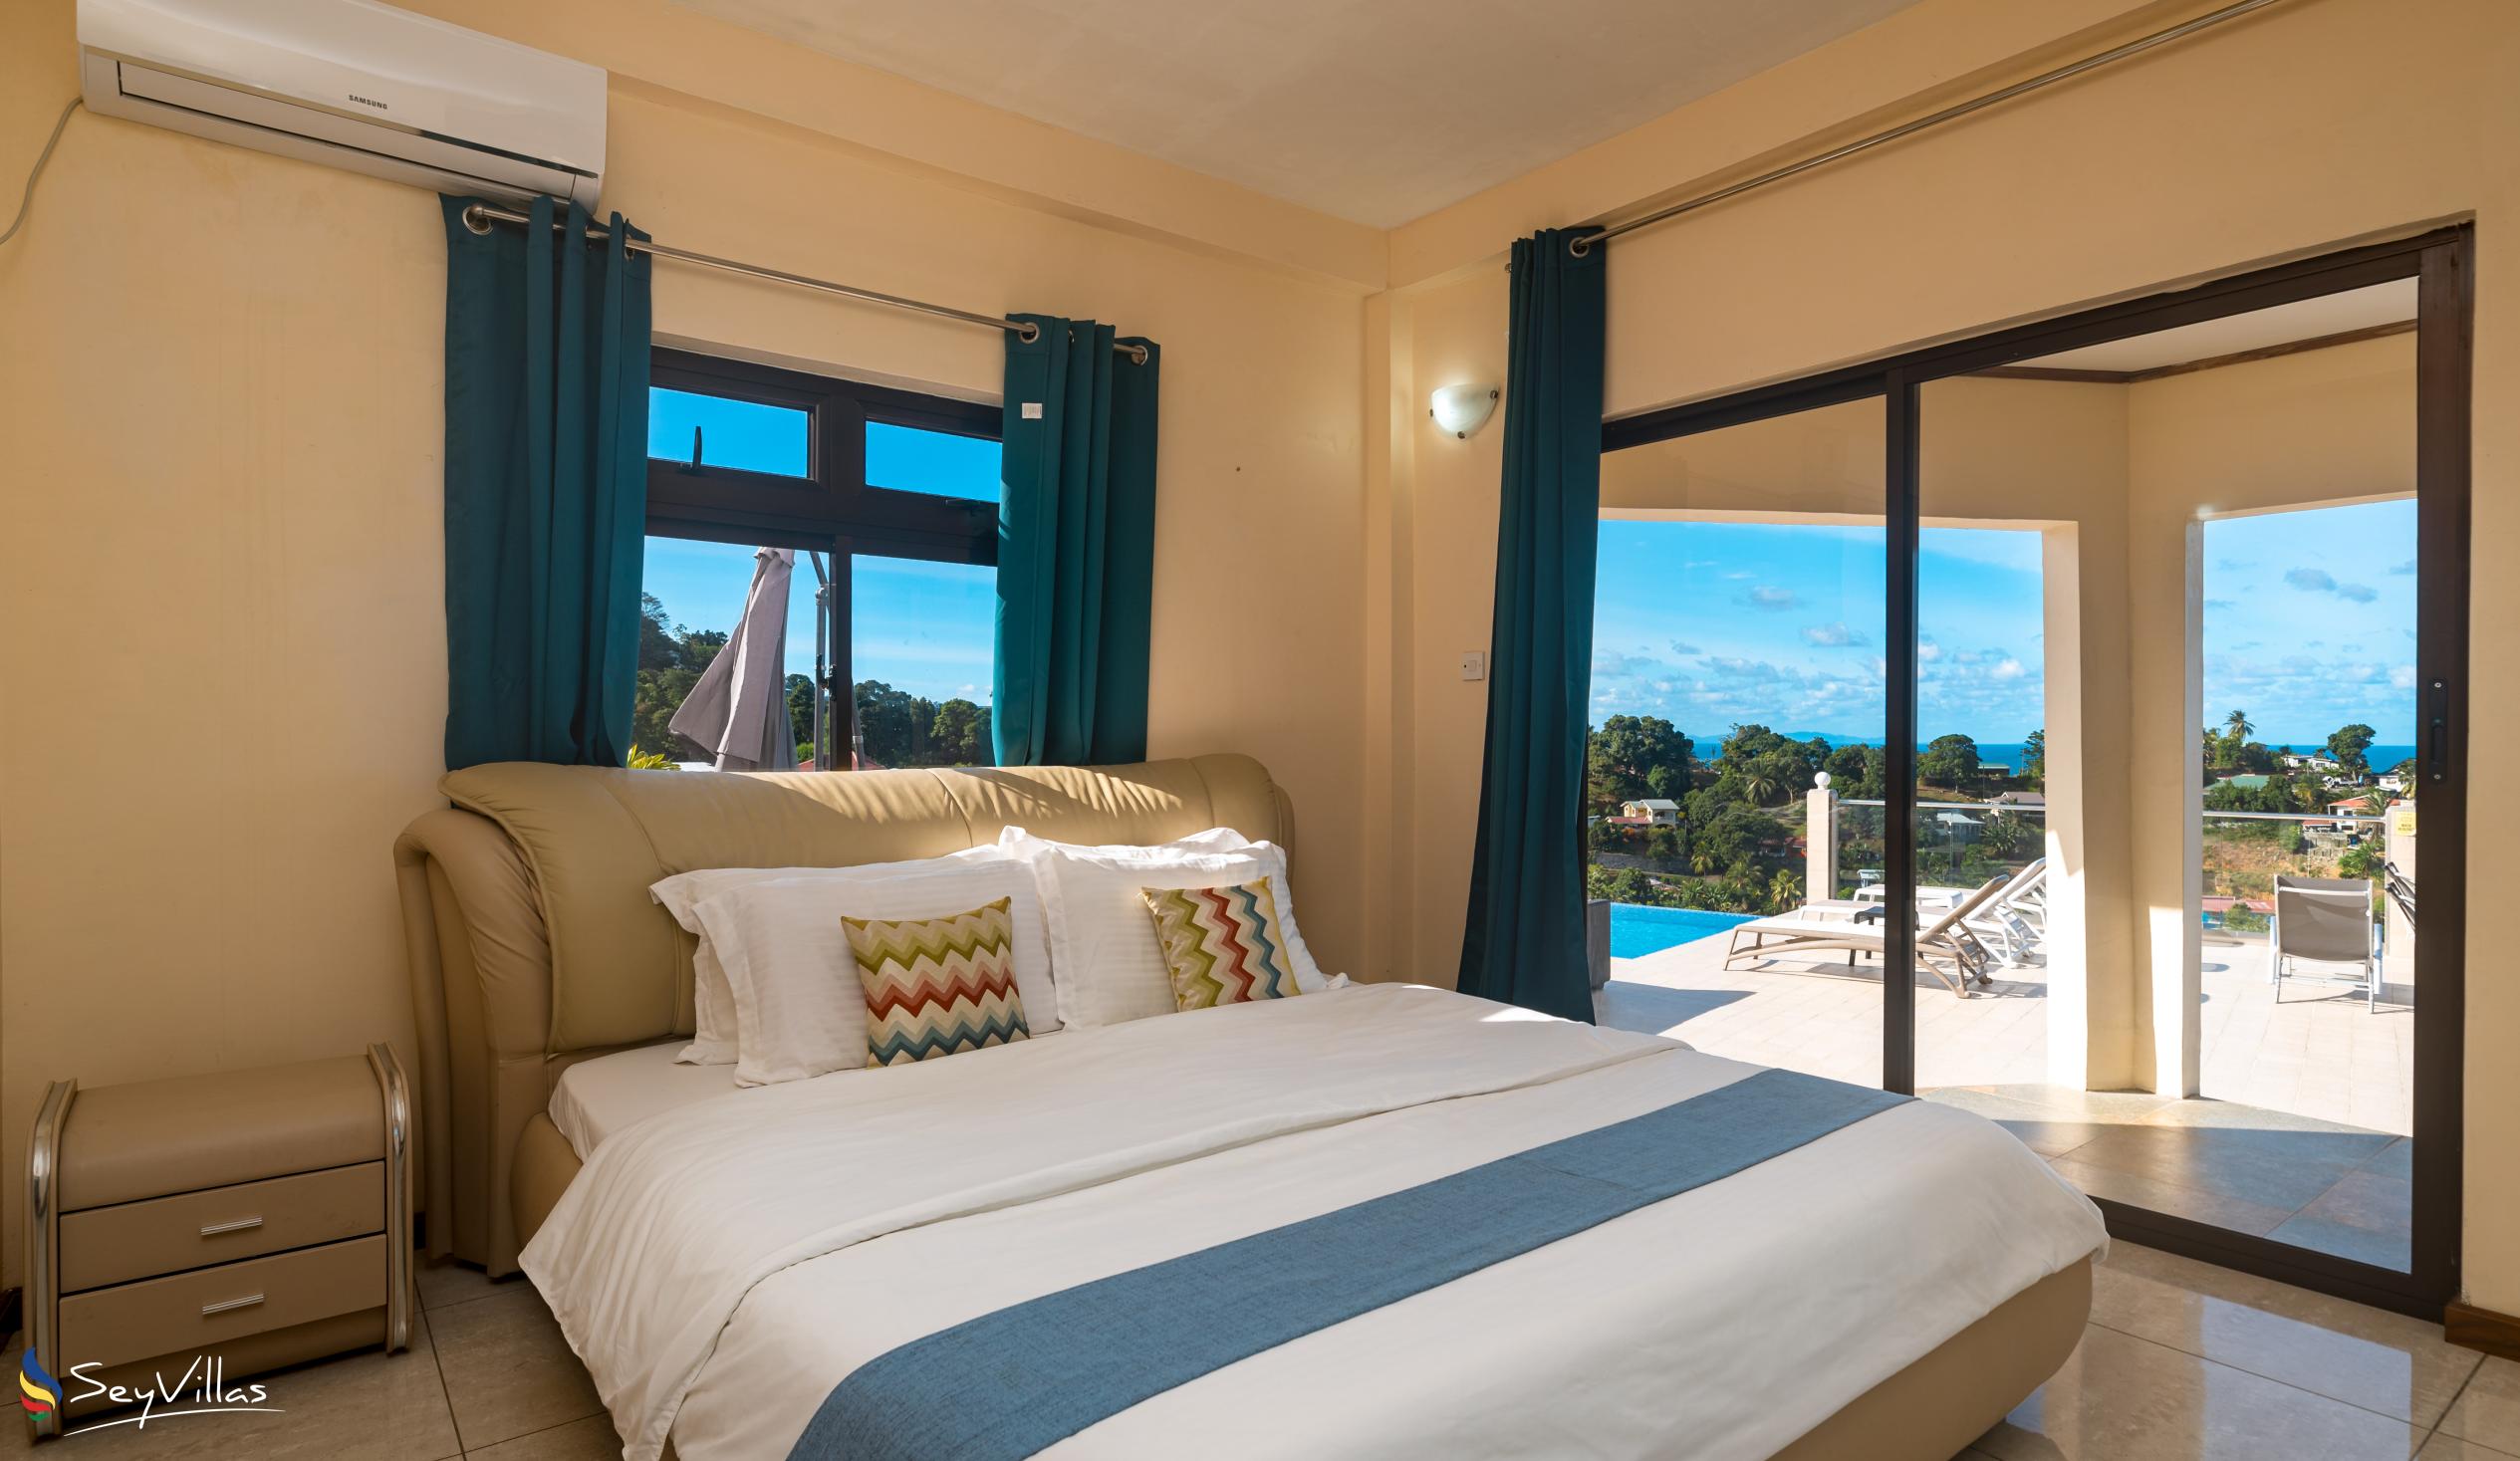 Photo 60: Maison L'Horizon - 2-Bedroom Apartment Vann Nor - Mahé (Seychelles)